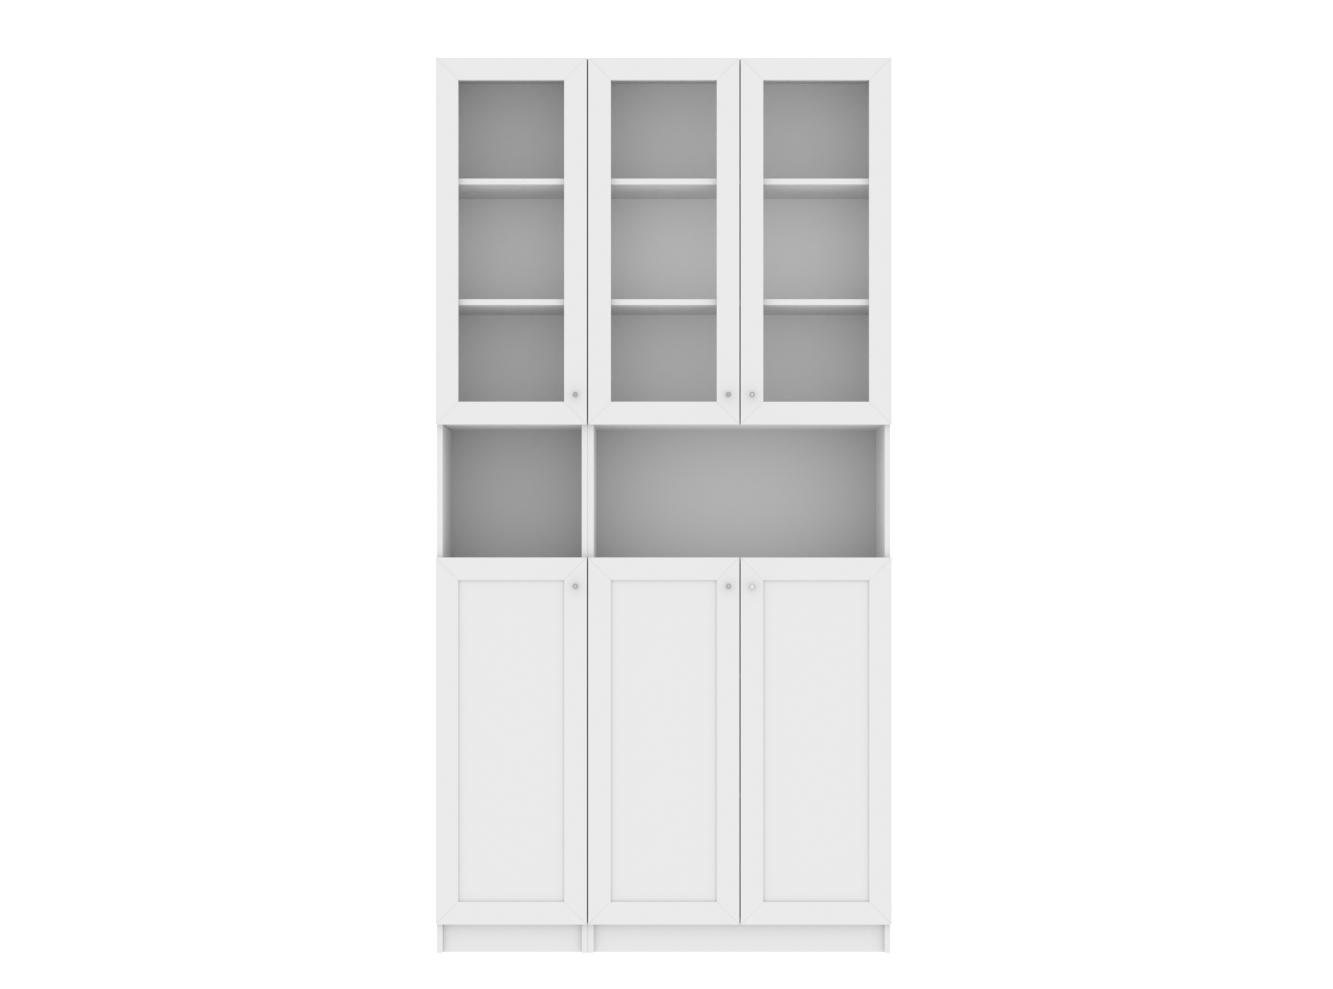  Книжный шкаф Билли 337 white ИКЕА (IKEA) изображение товара